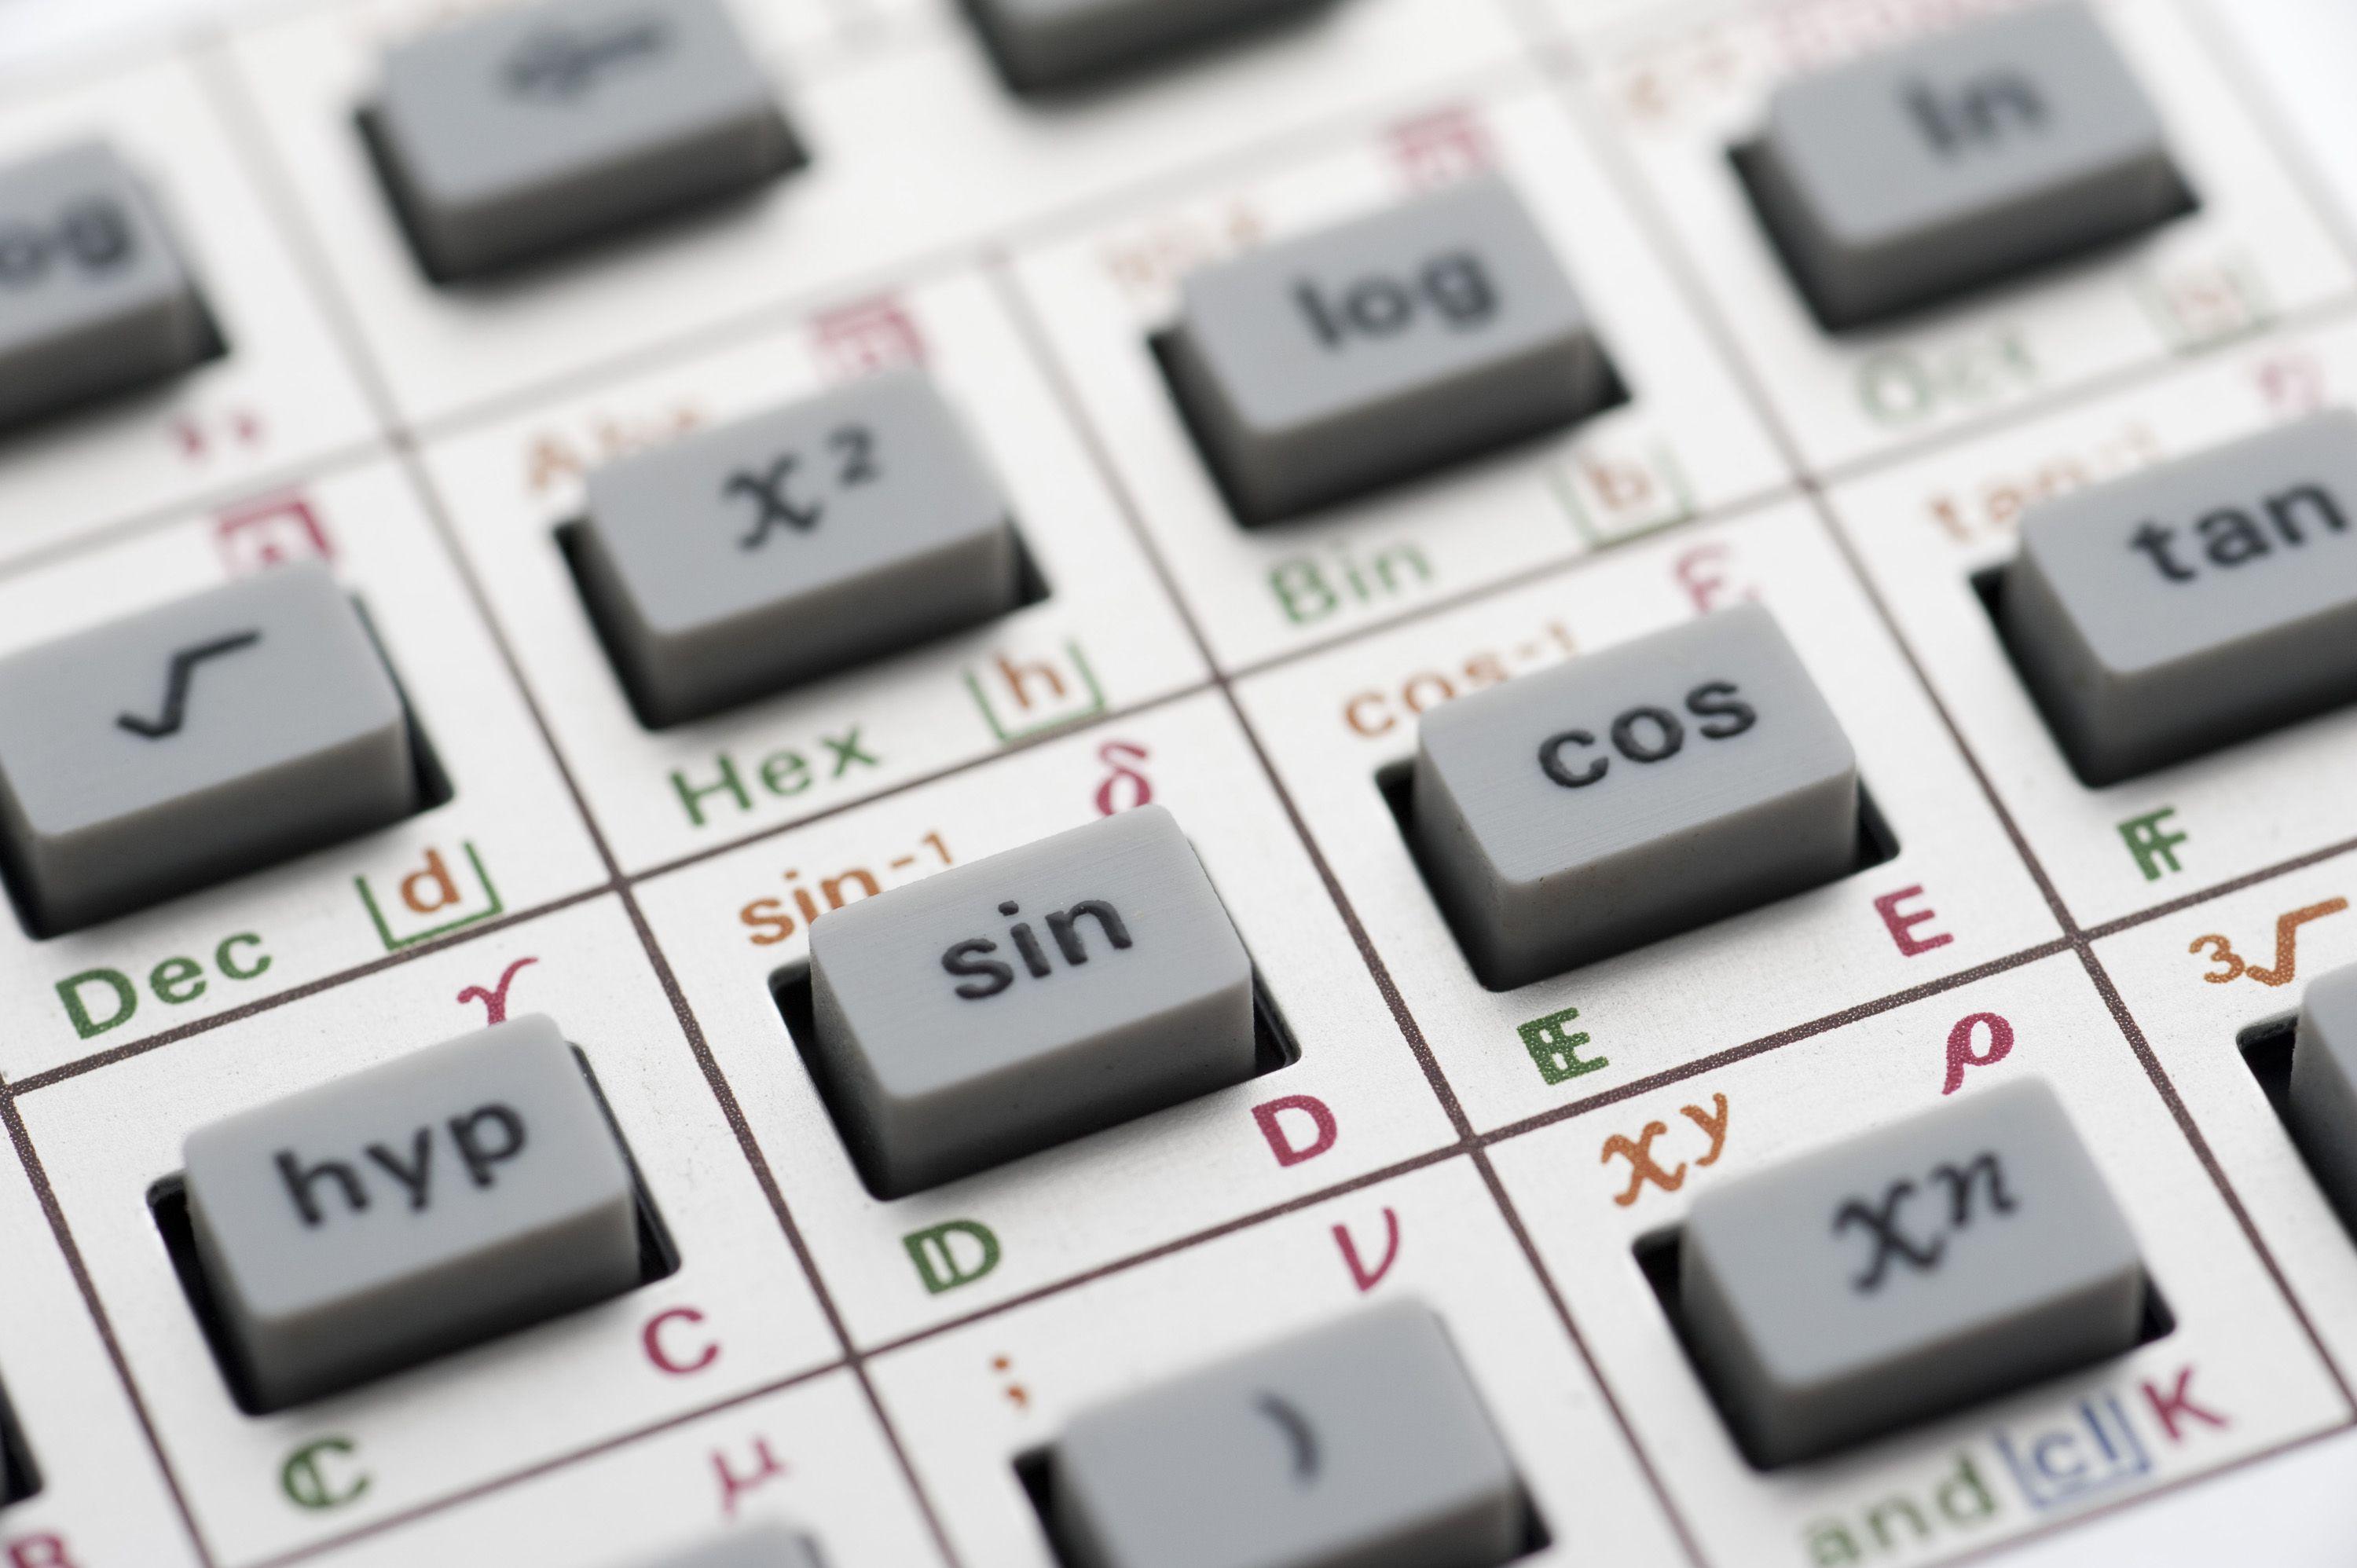 Free image of Trigonometry calculator keys